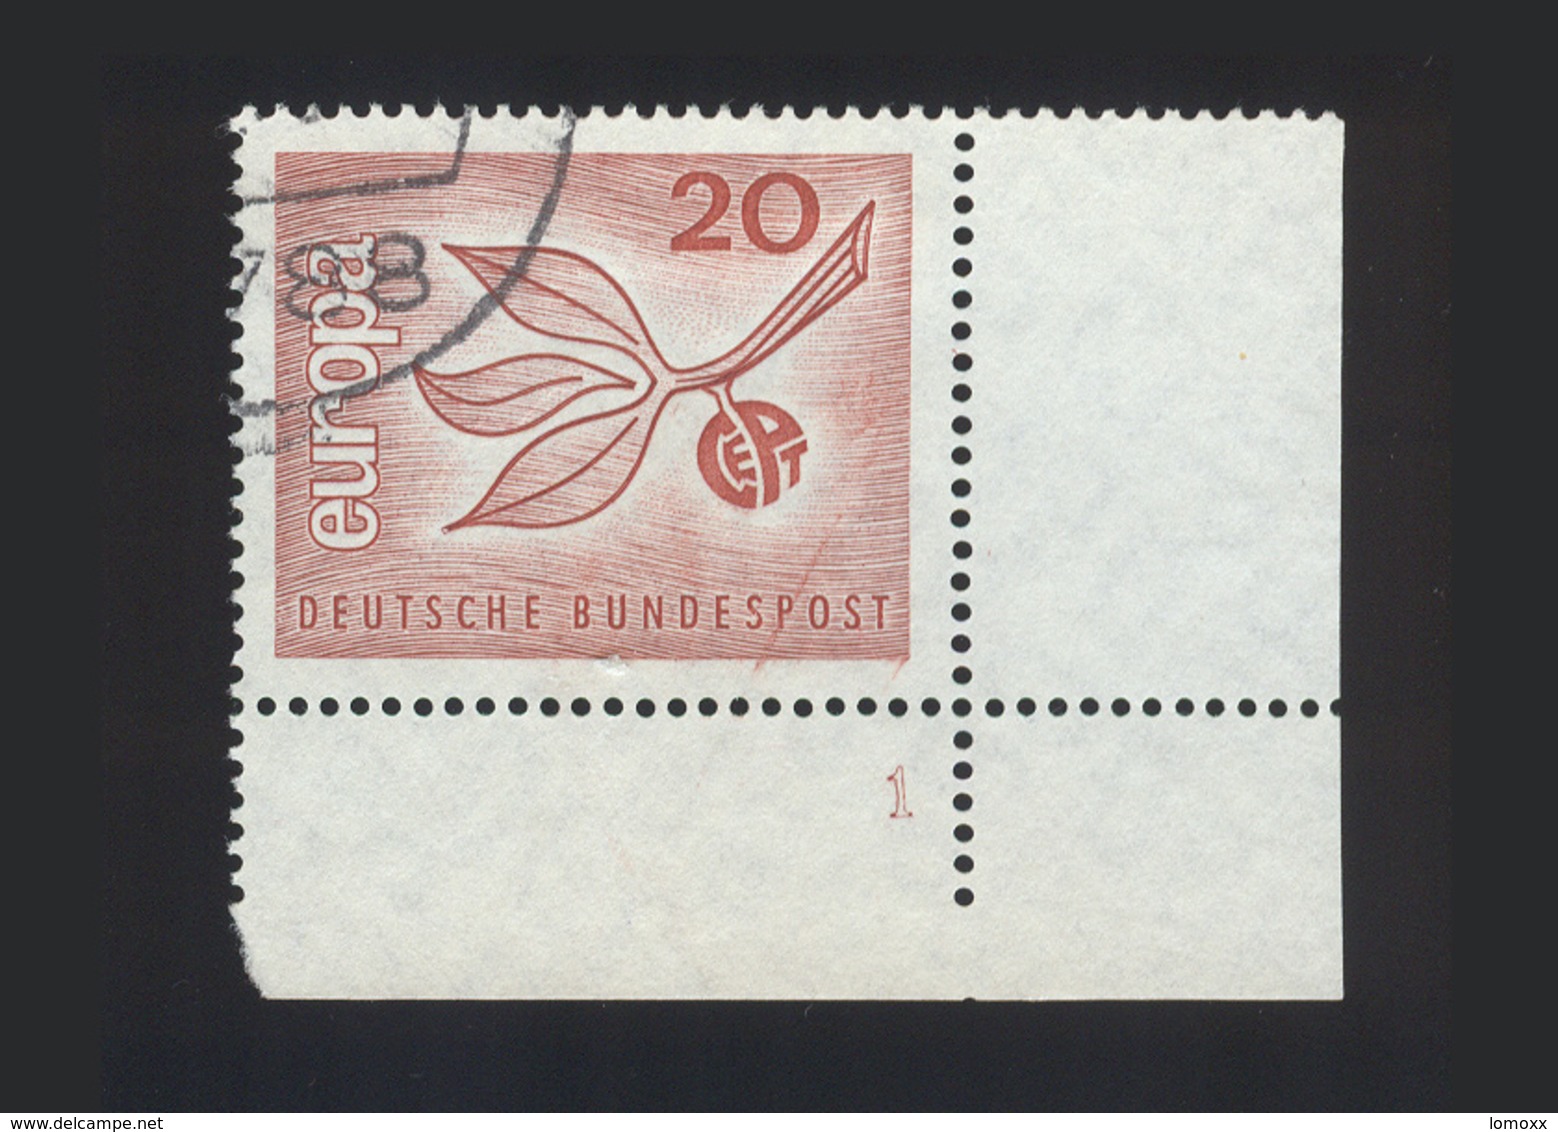 BRD 1965, Michel-Nr. 484, Europa 1965, 20 Pf., Eckrand Rechts Unten Mit Formnummer 1, Gestempelt, Siehe Foto - Oblitérés